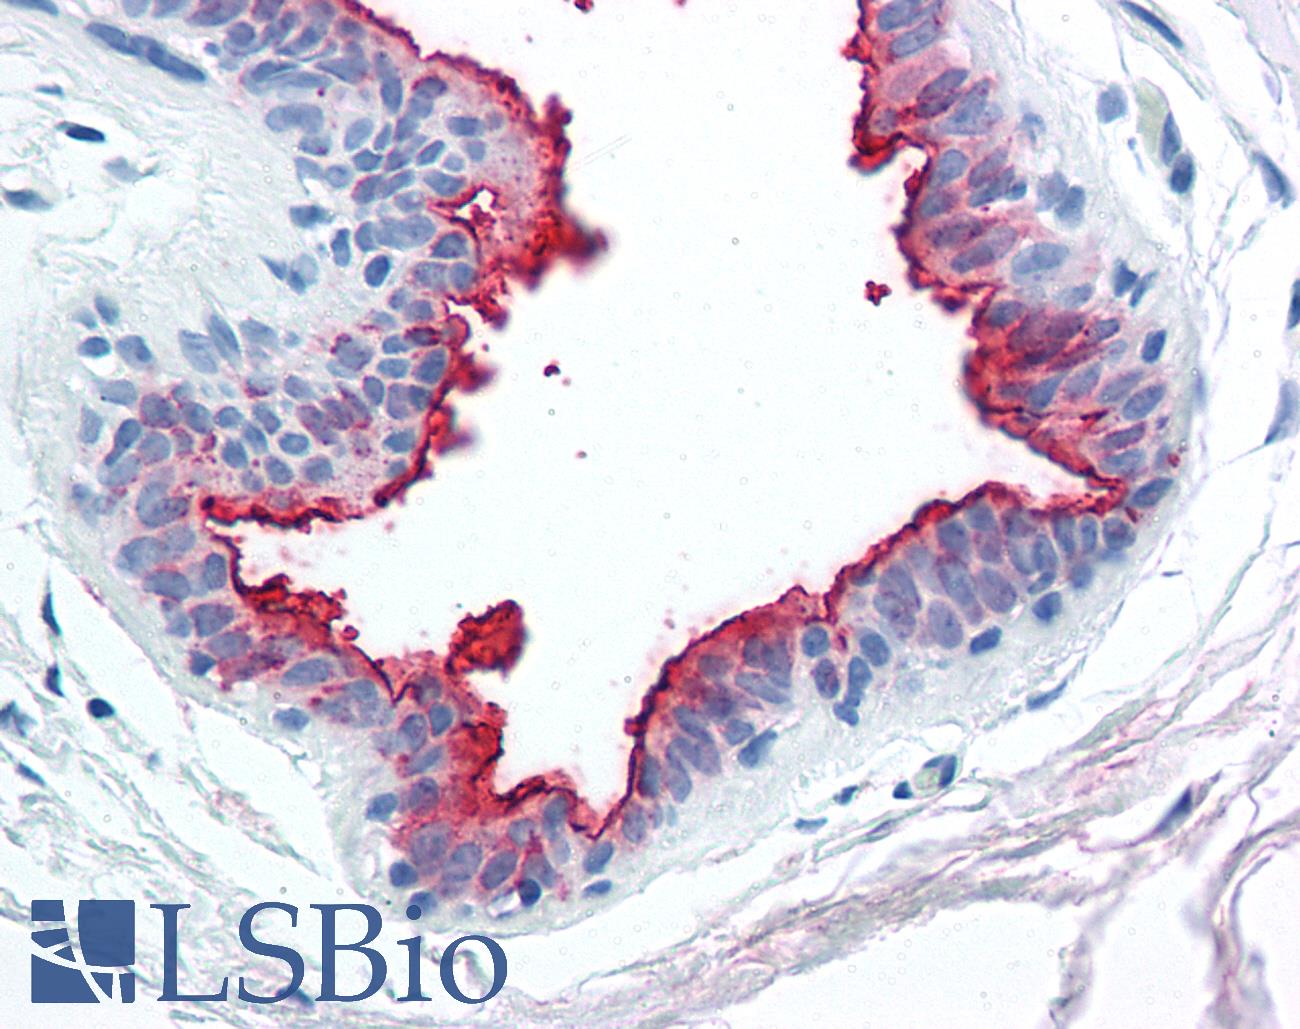 EMA / MUC1 Antibody - Human Breast: Formalin-Fixed, Paraffin-Embedded (FFPE)